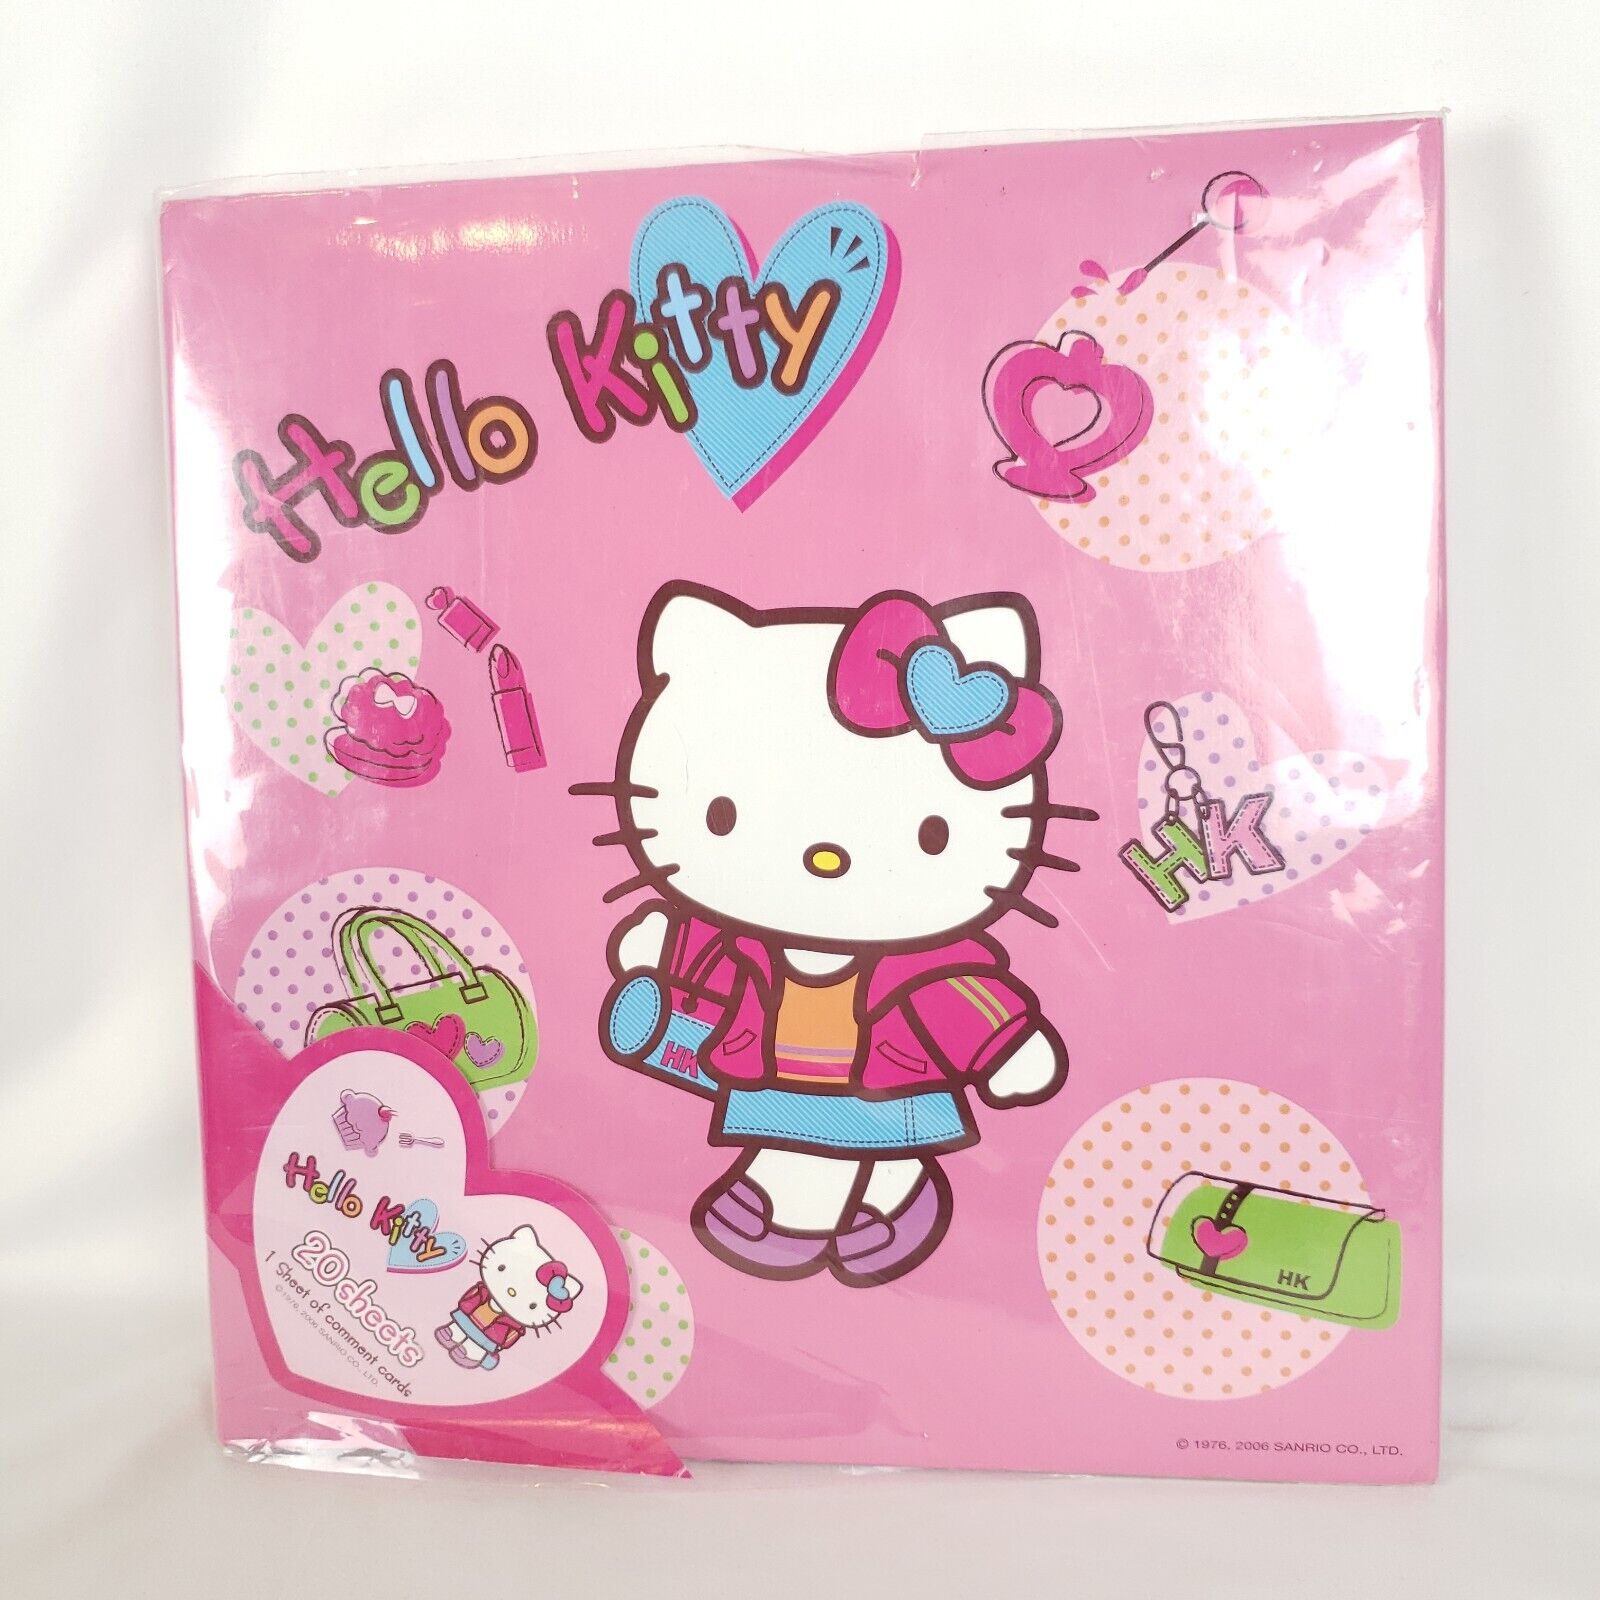 Vintage Hello Kitty Photo Album 13x13 Inches Plastic Cover Pink Sanrio 2006